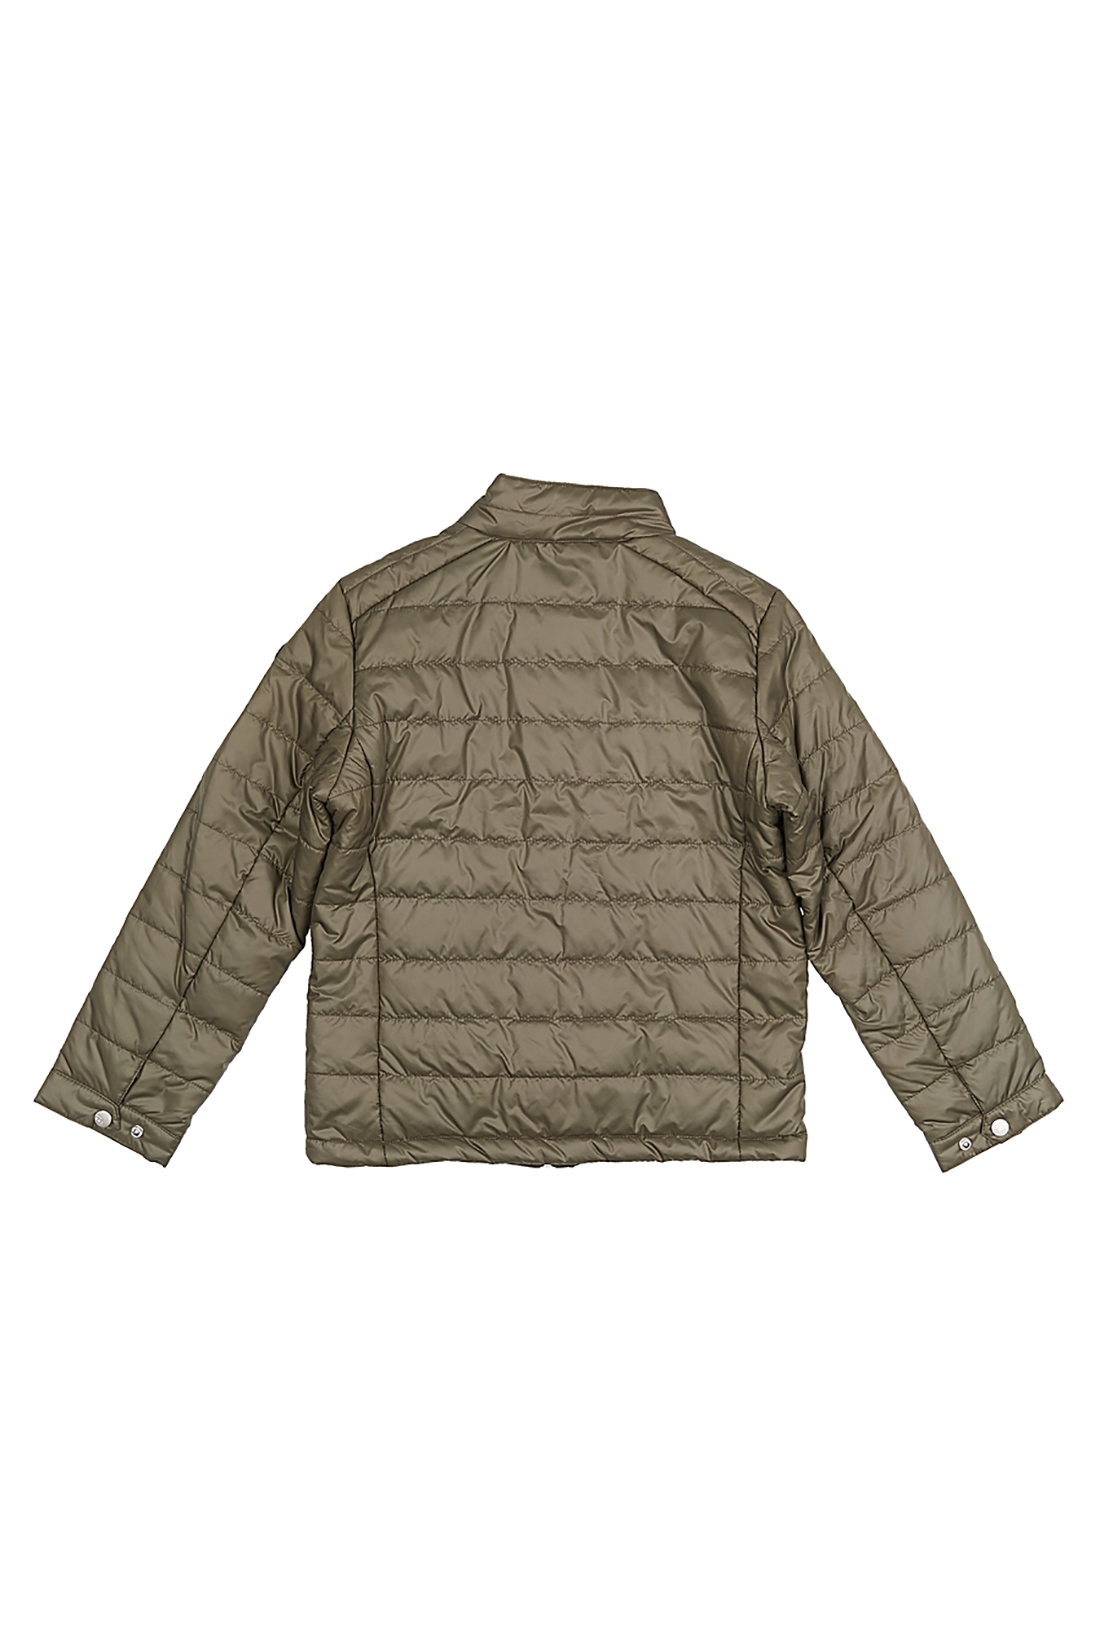 Куртка для мальчика (арт. baon BJ538002), размер 158-164, цвет зеленый Куртка для мальчика (арт. baon BJ538002) - фото 4